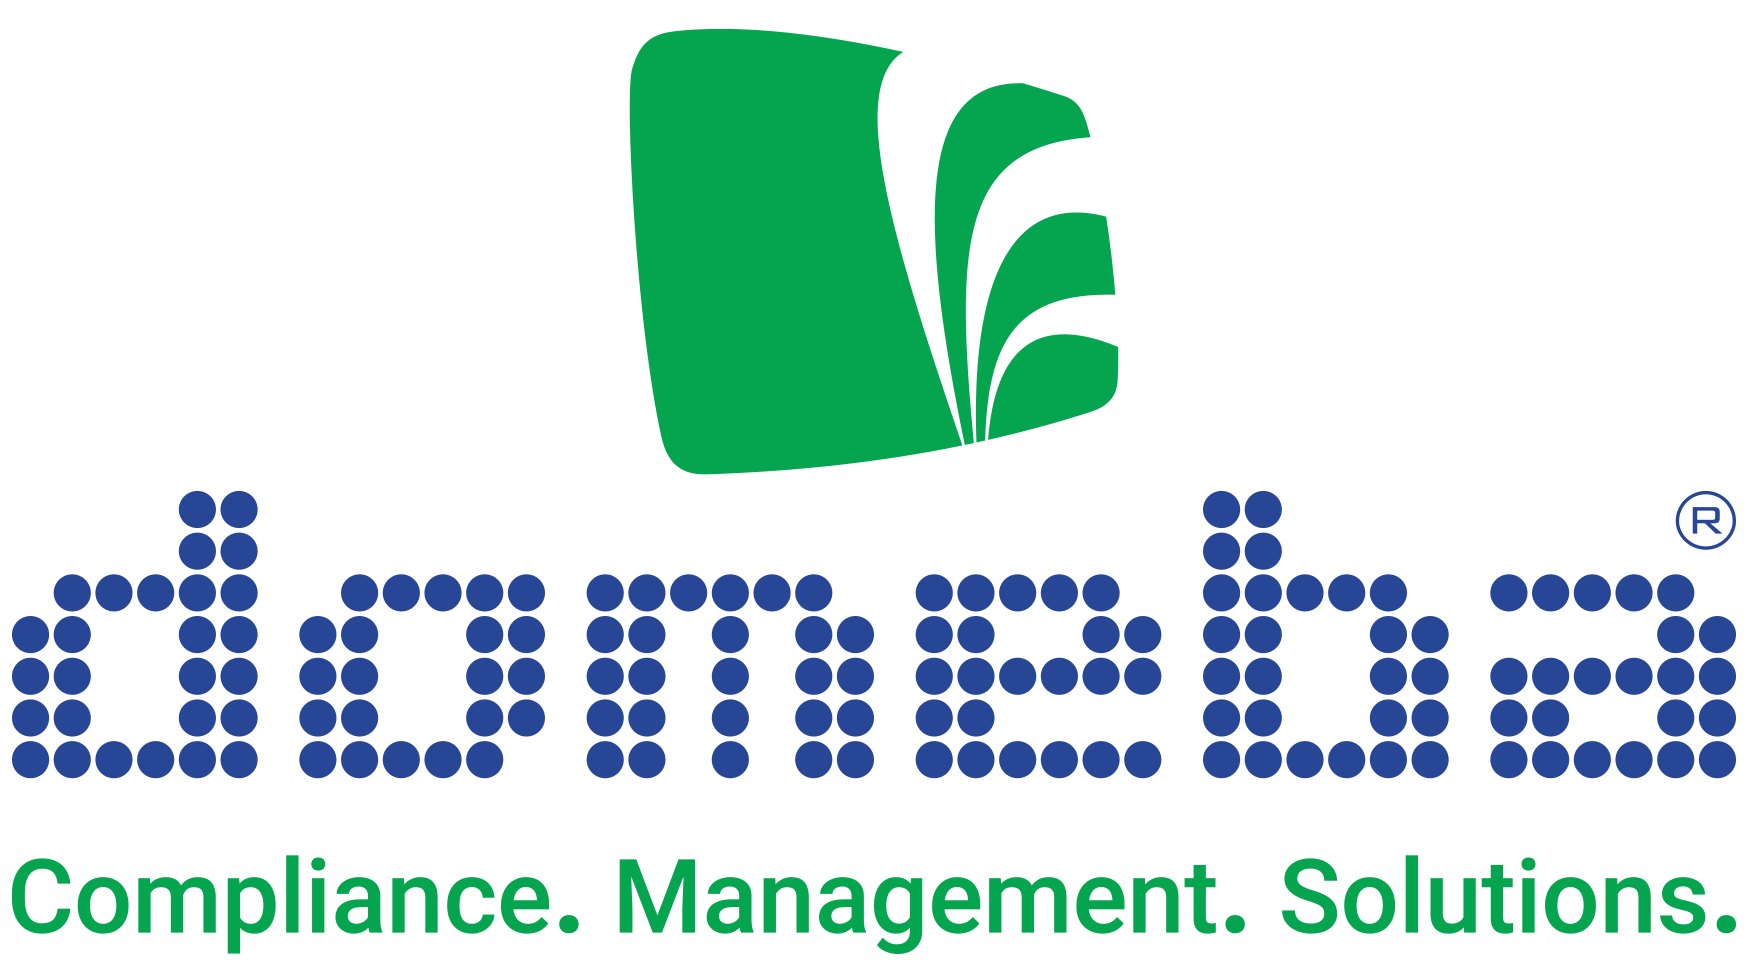 domeba distribution GmbH Logo